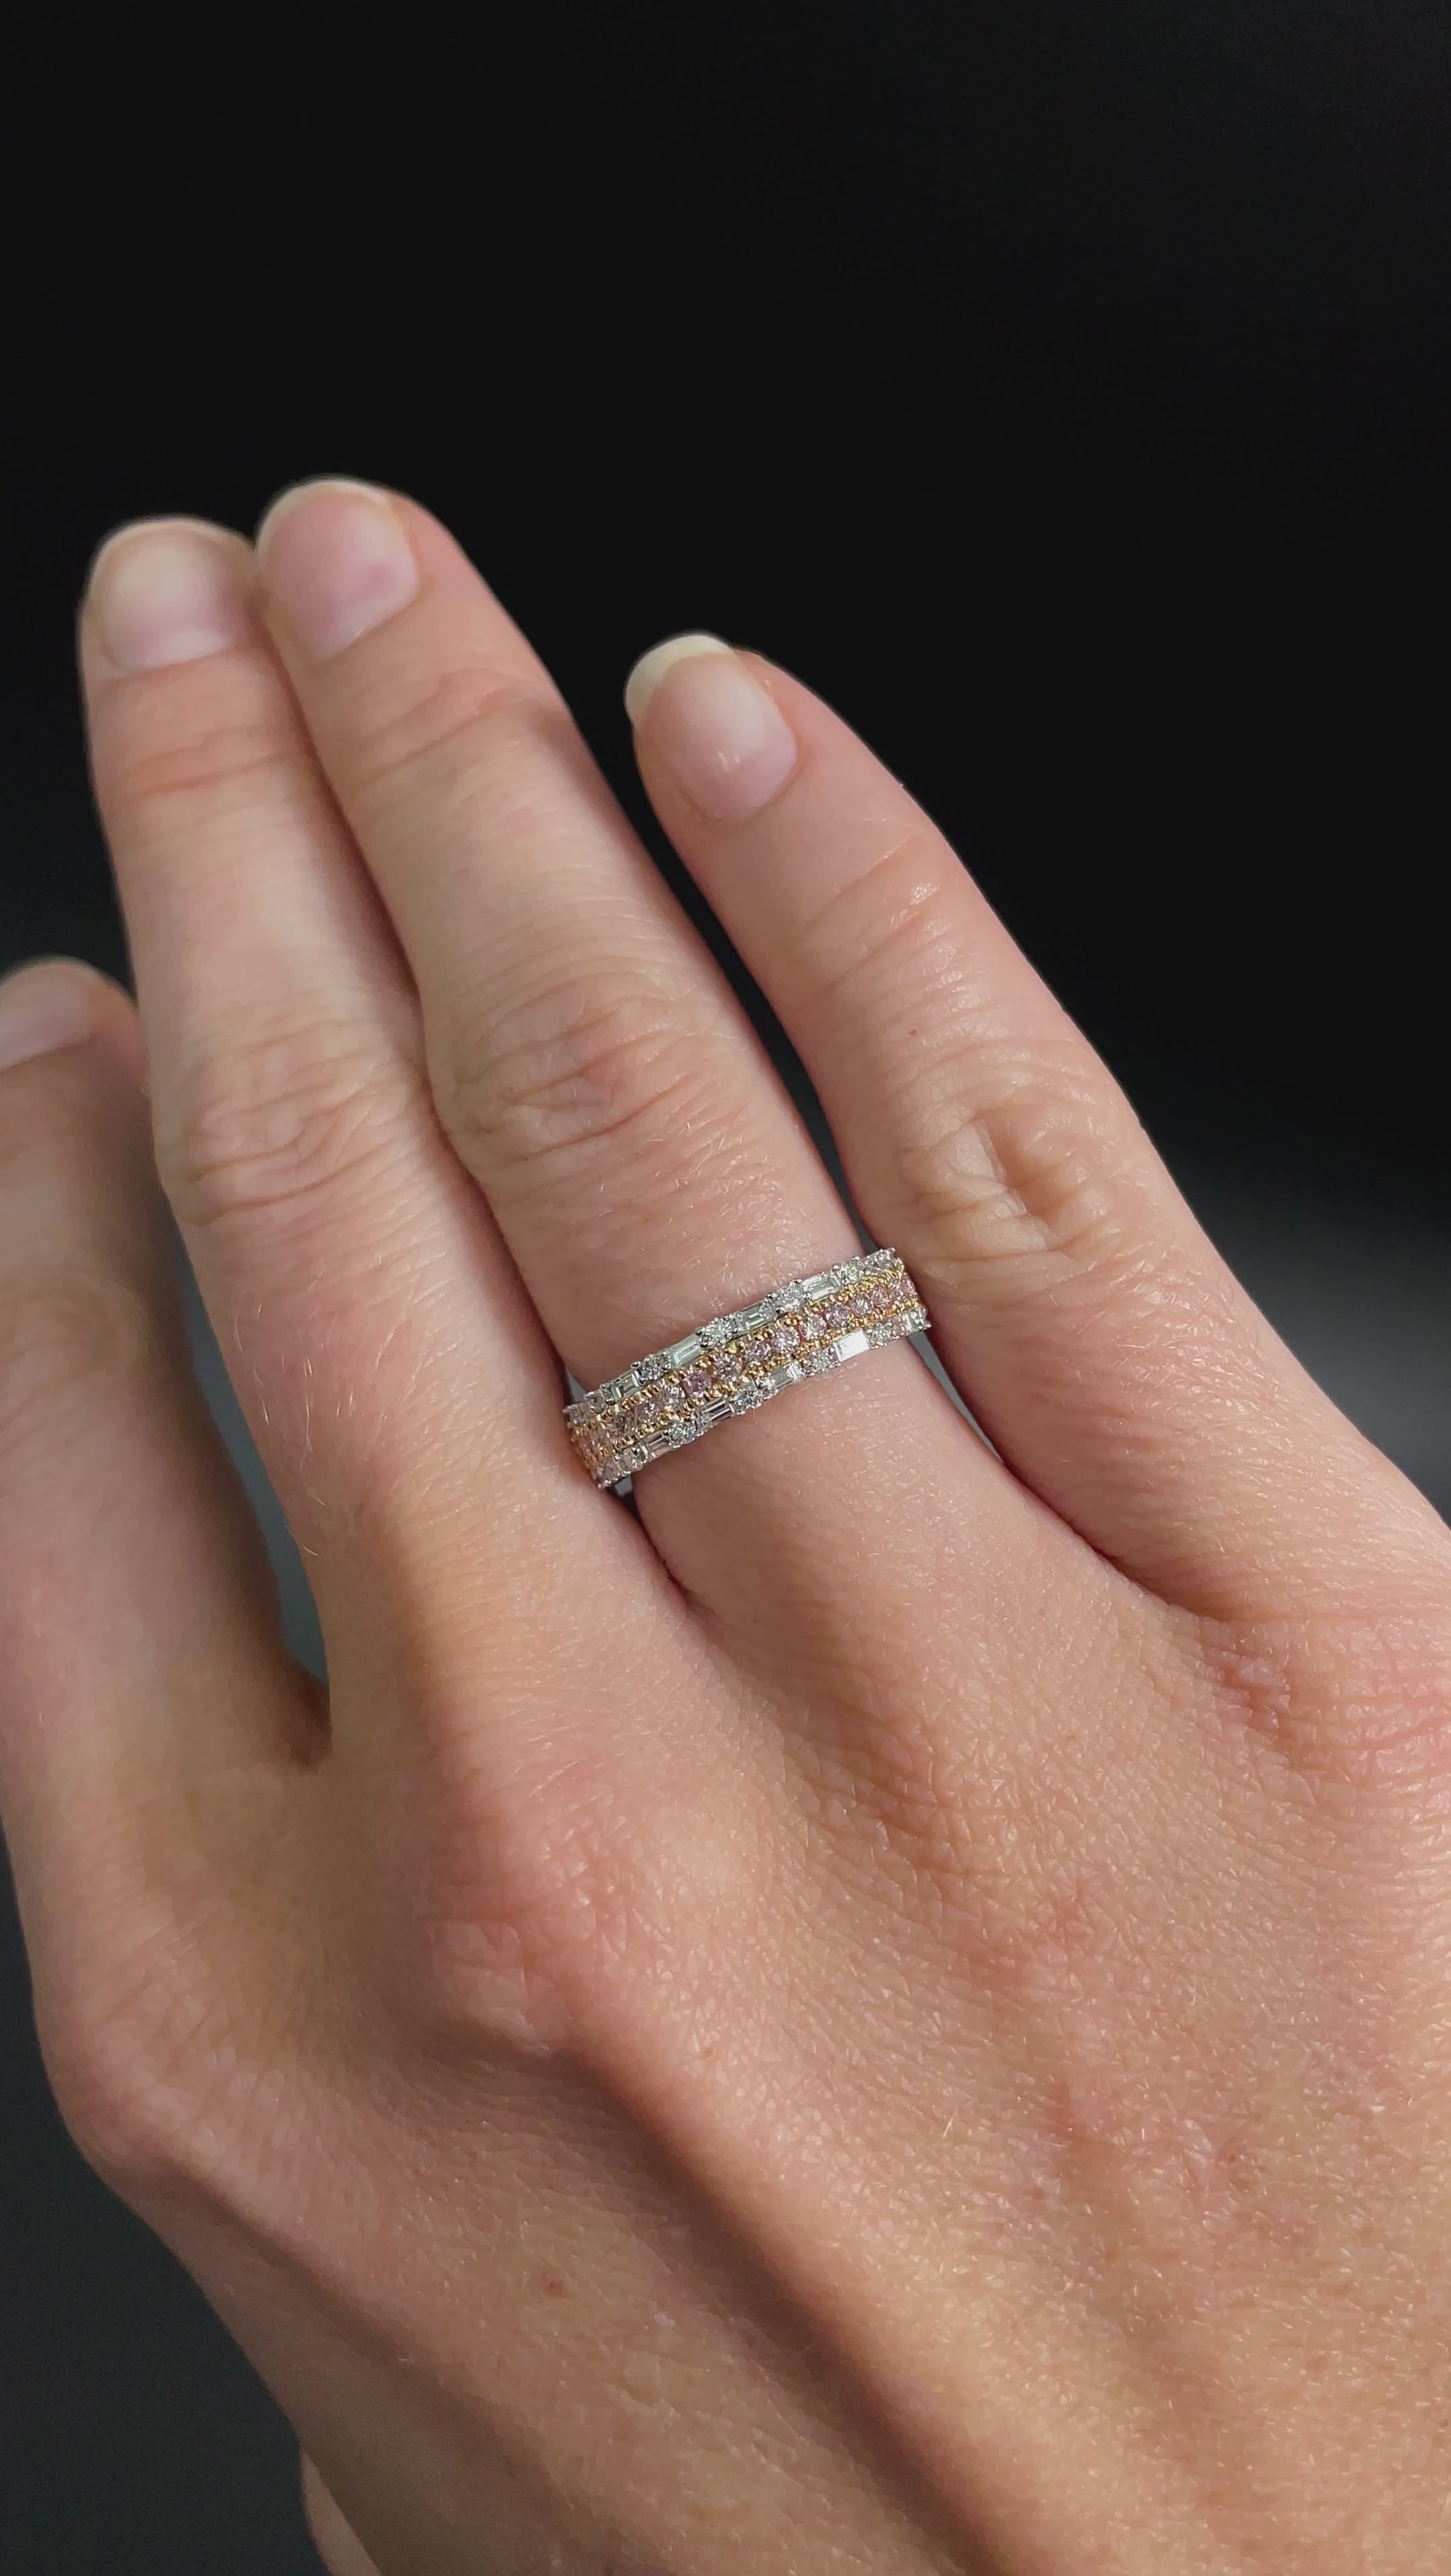 18 Carat Gold Diamond Set Ring With Pink Diamonds available at LeGassick Diamonds and Jewellery Gold Coast, Australia.